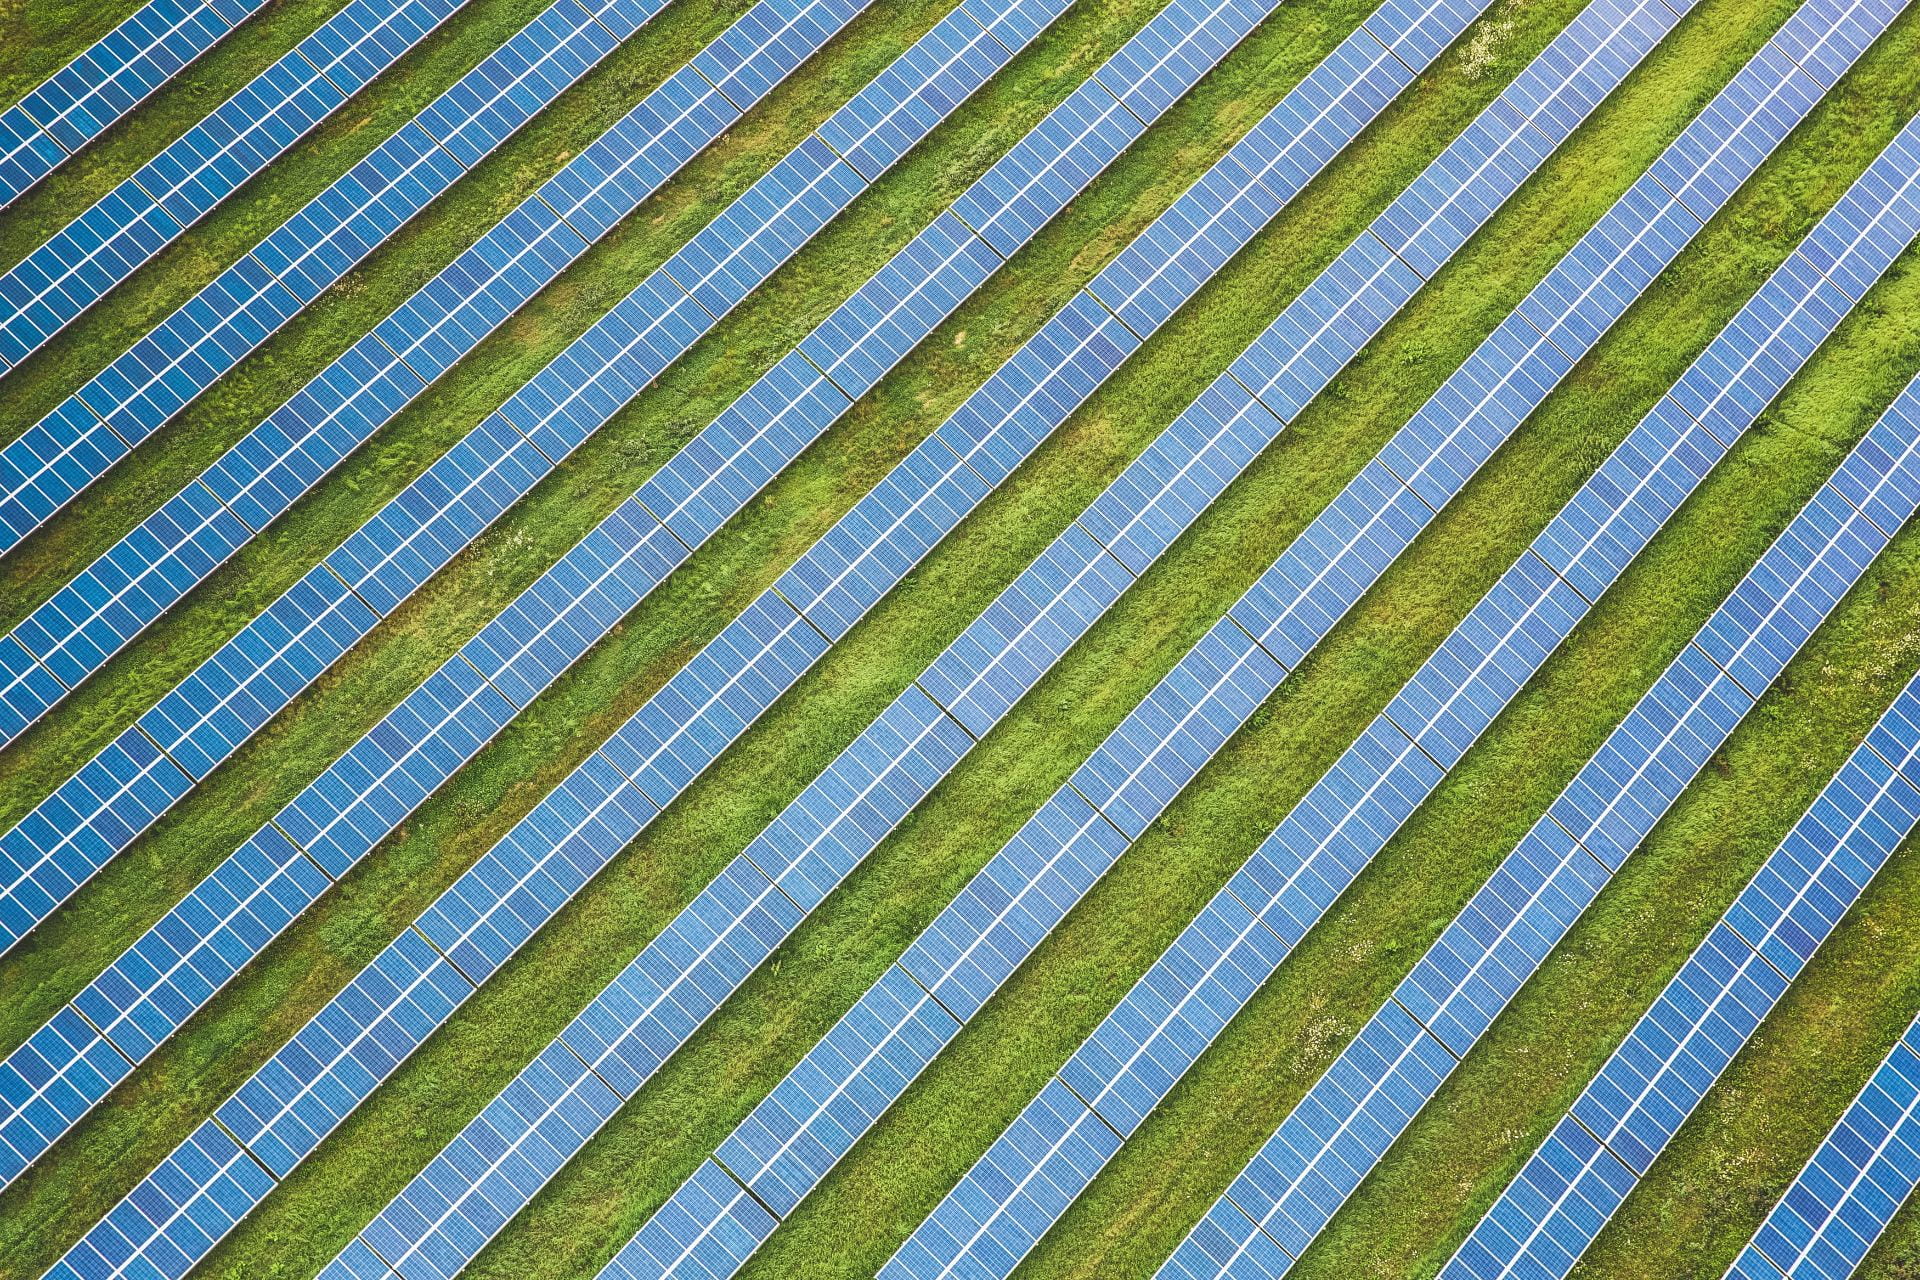 Aerial view of many solar panels in a field. Credit: Markus Spiske, Unsplash, CC